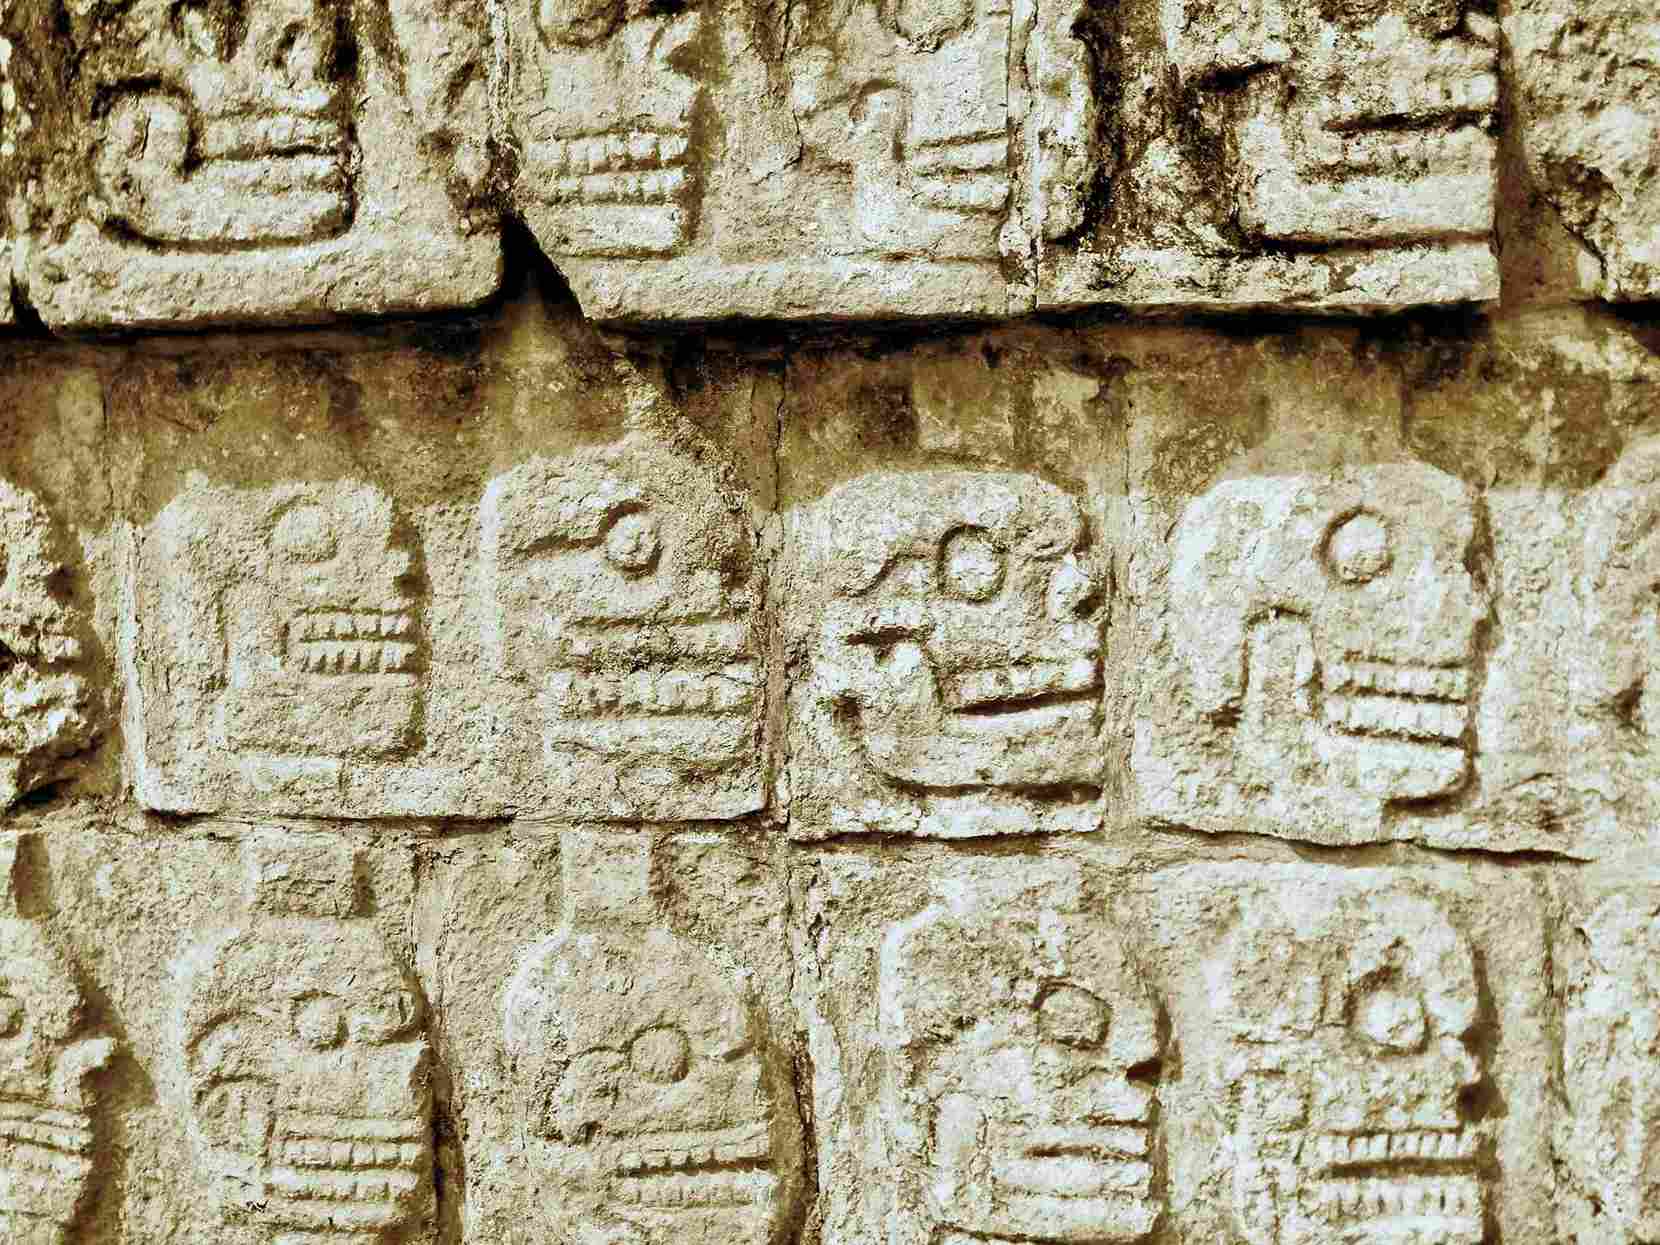 Mitos mayas